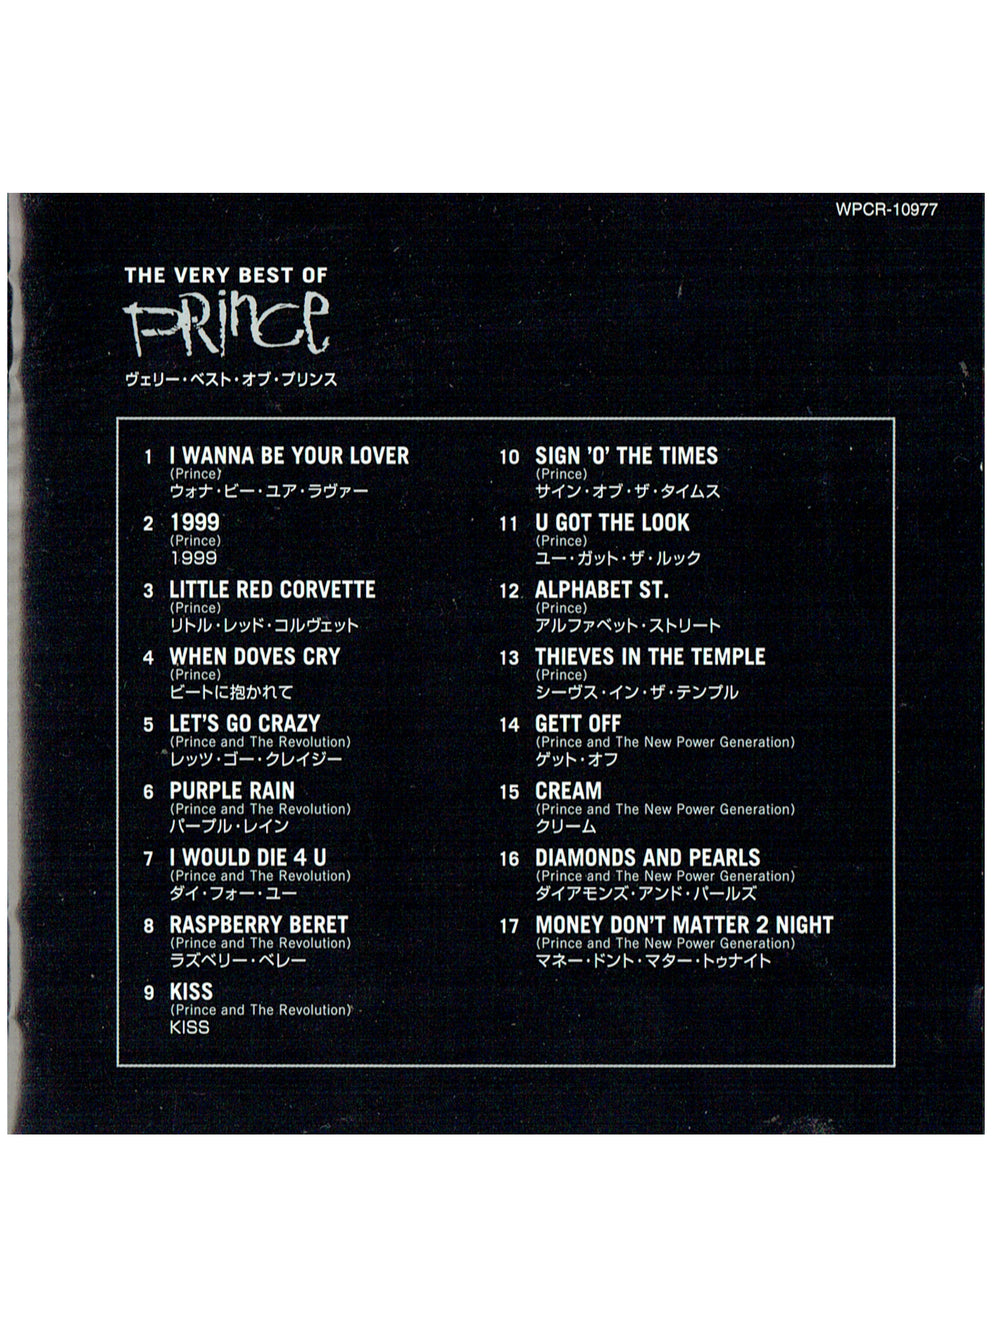 Prince The Very Best Of CD Album 17 Tracks Jewel Case Pre-Loved Japan Release